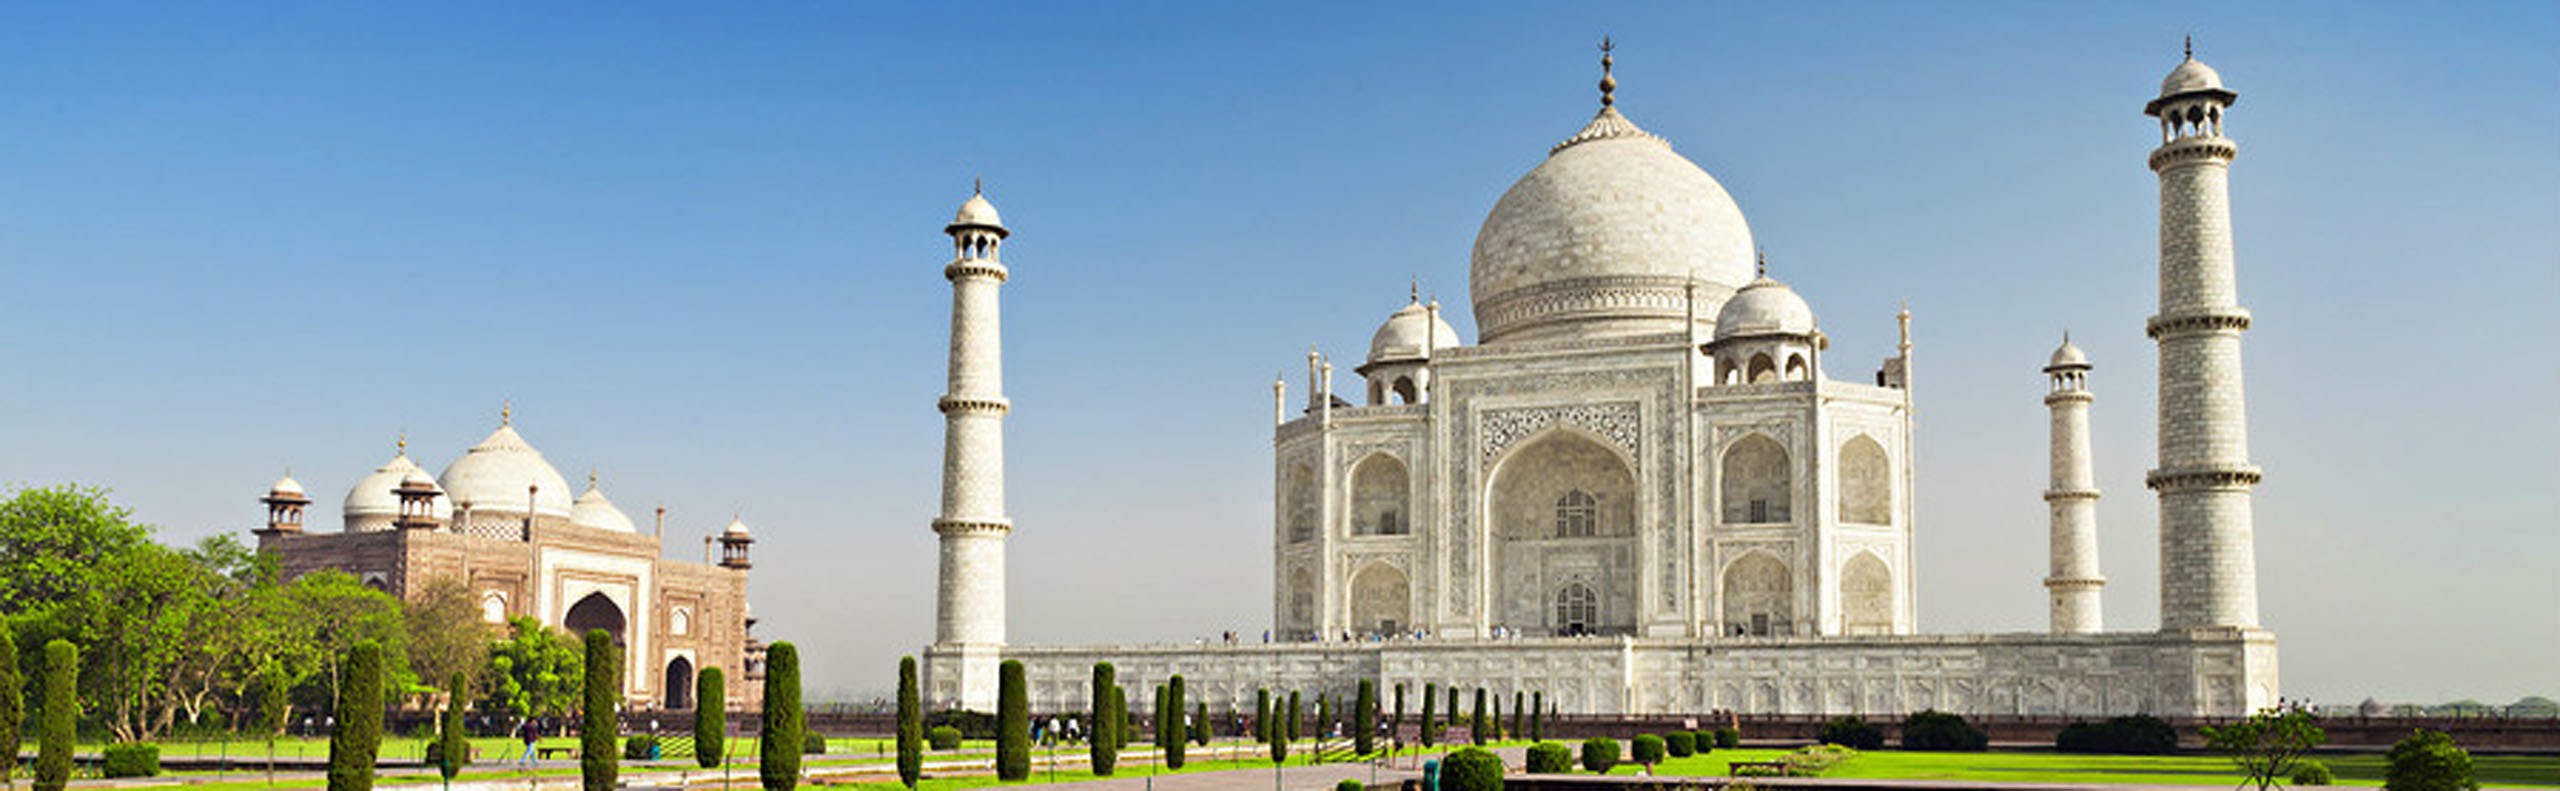 Best Time to Visit the Taj Mahal